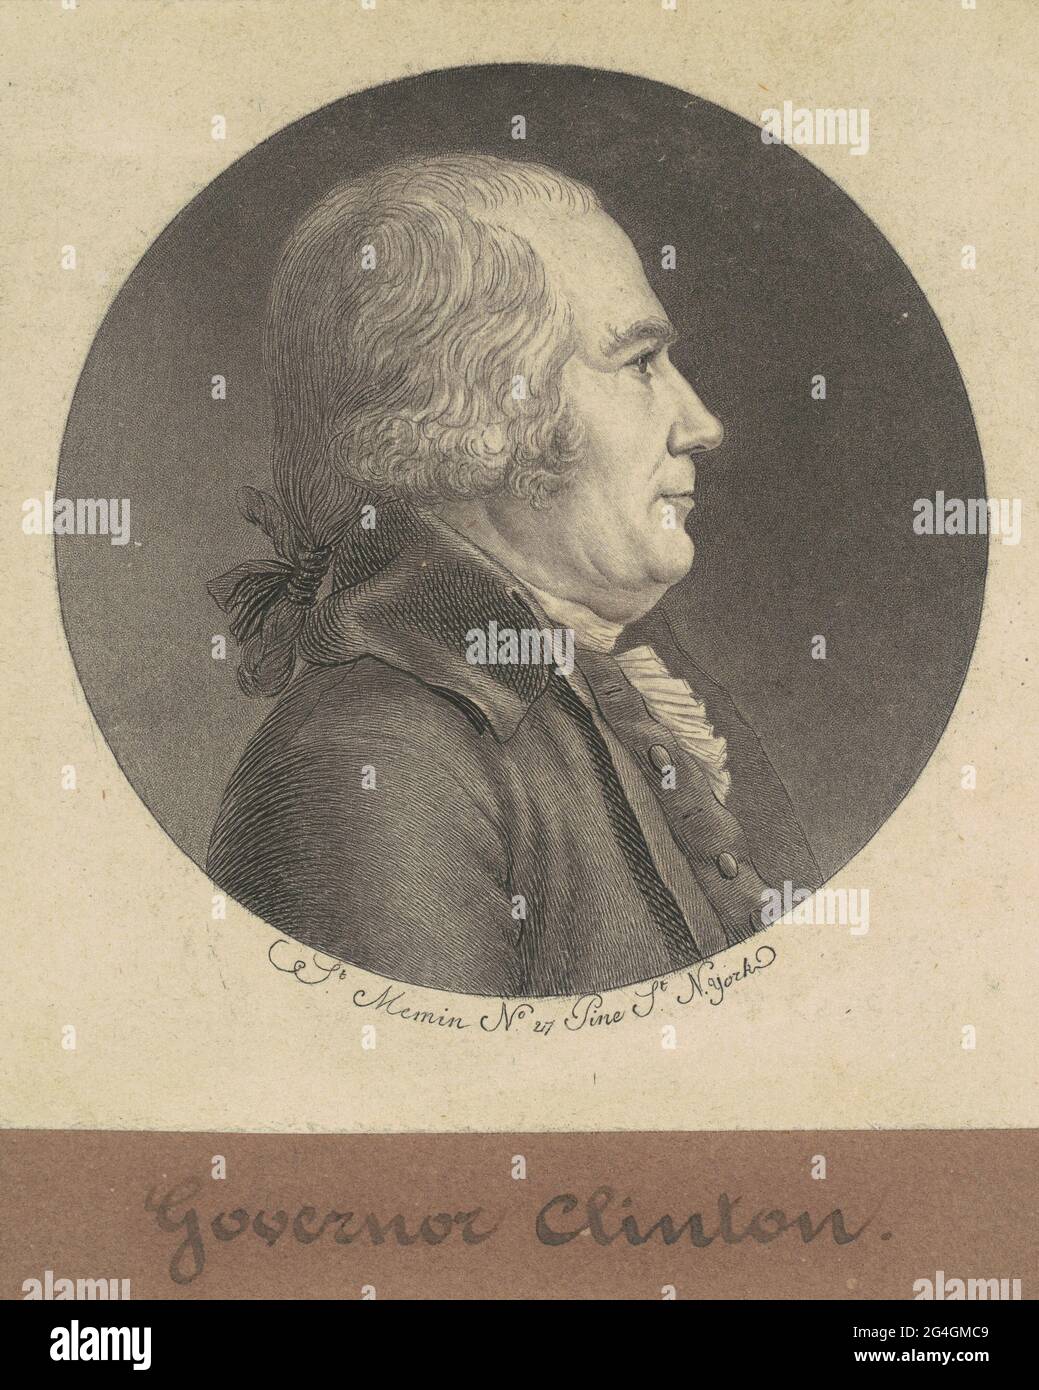 George Clinton, 1797. Stock Photo